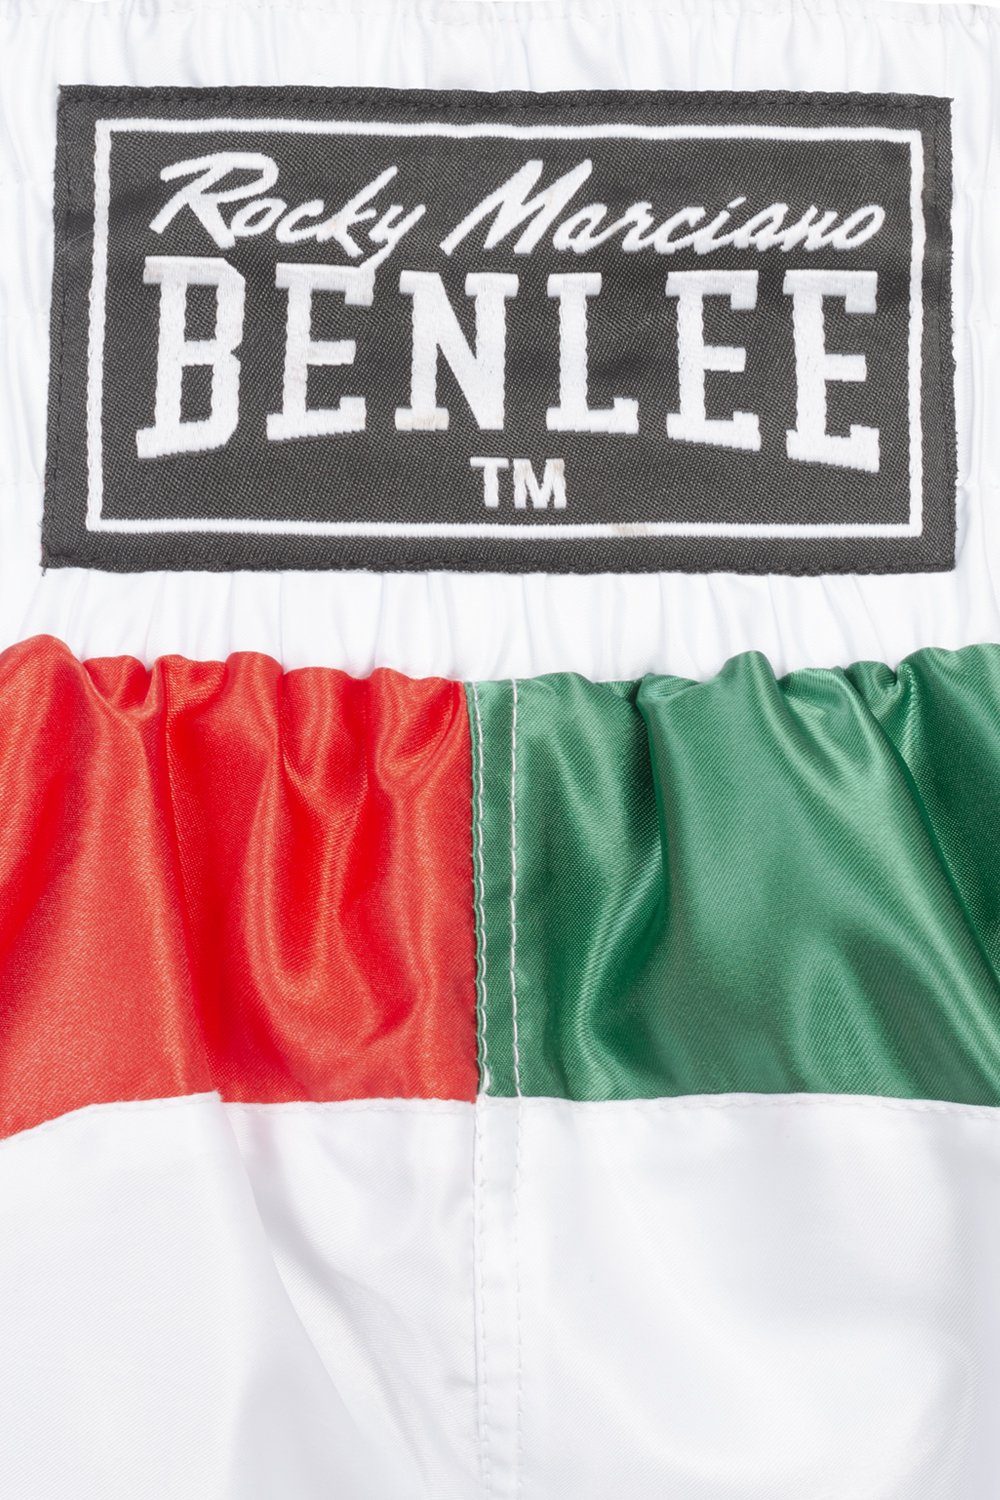 BONAVENTURE Rocky Trainingshose White/Green/Red Marciano Benlee